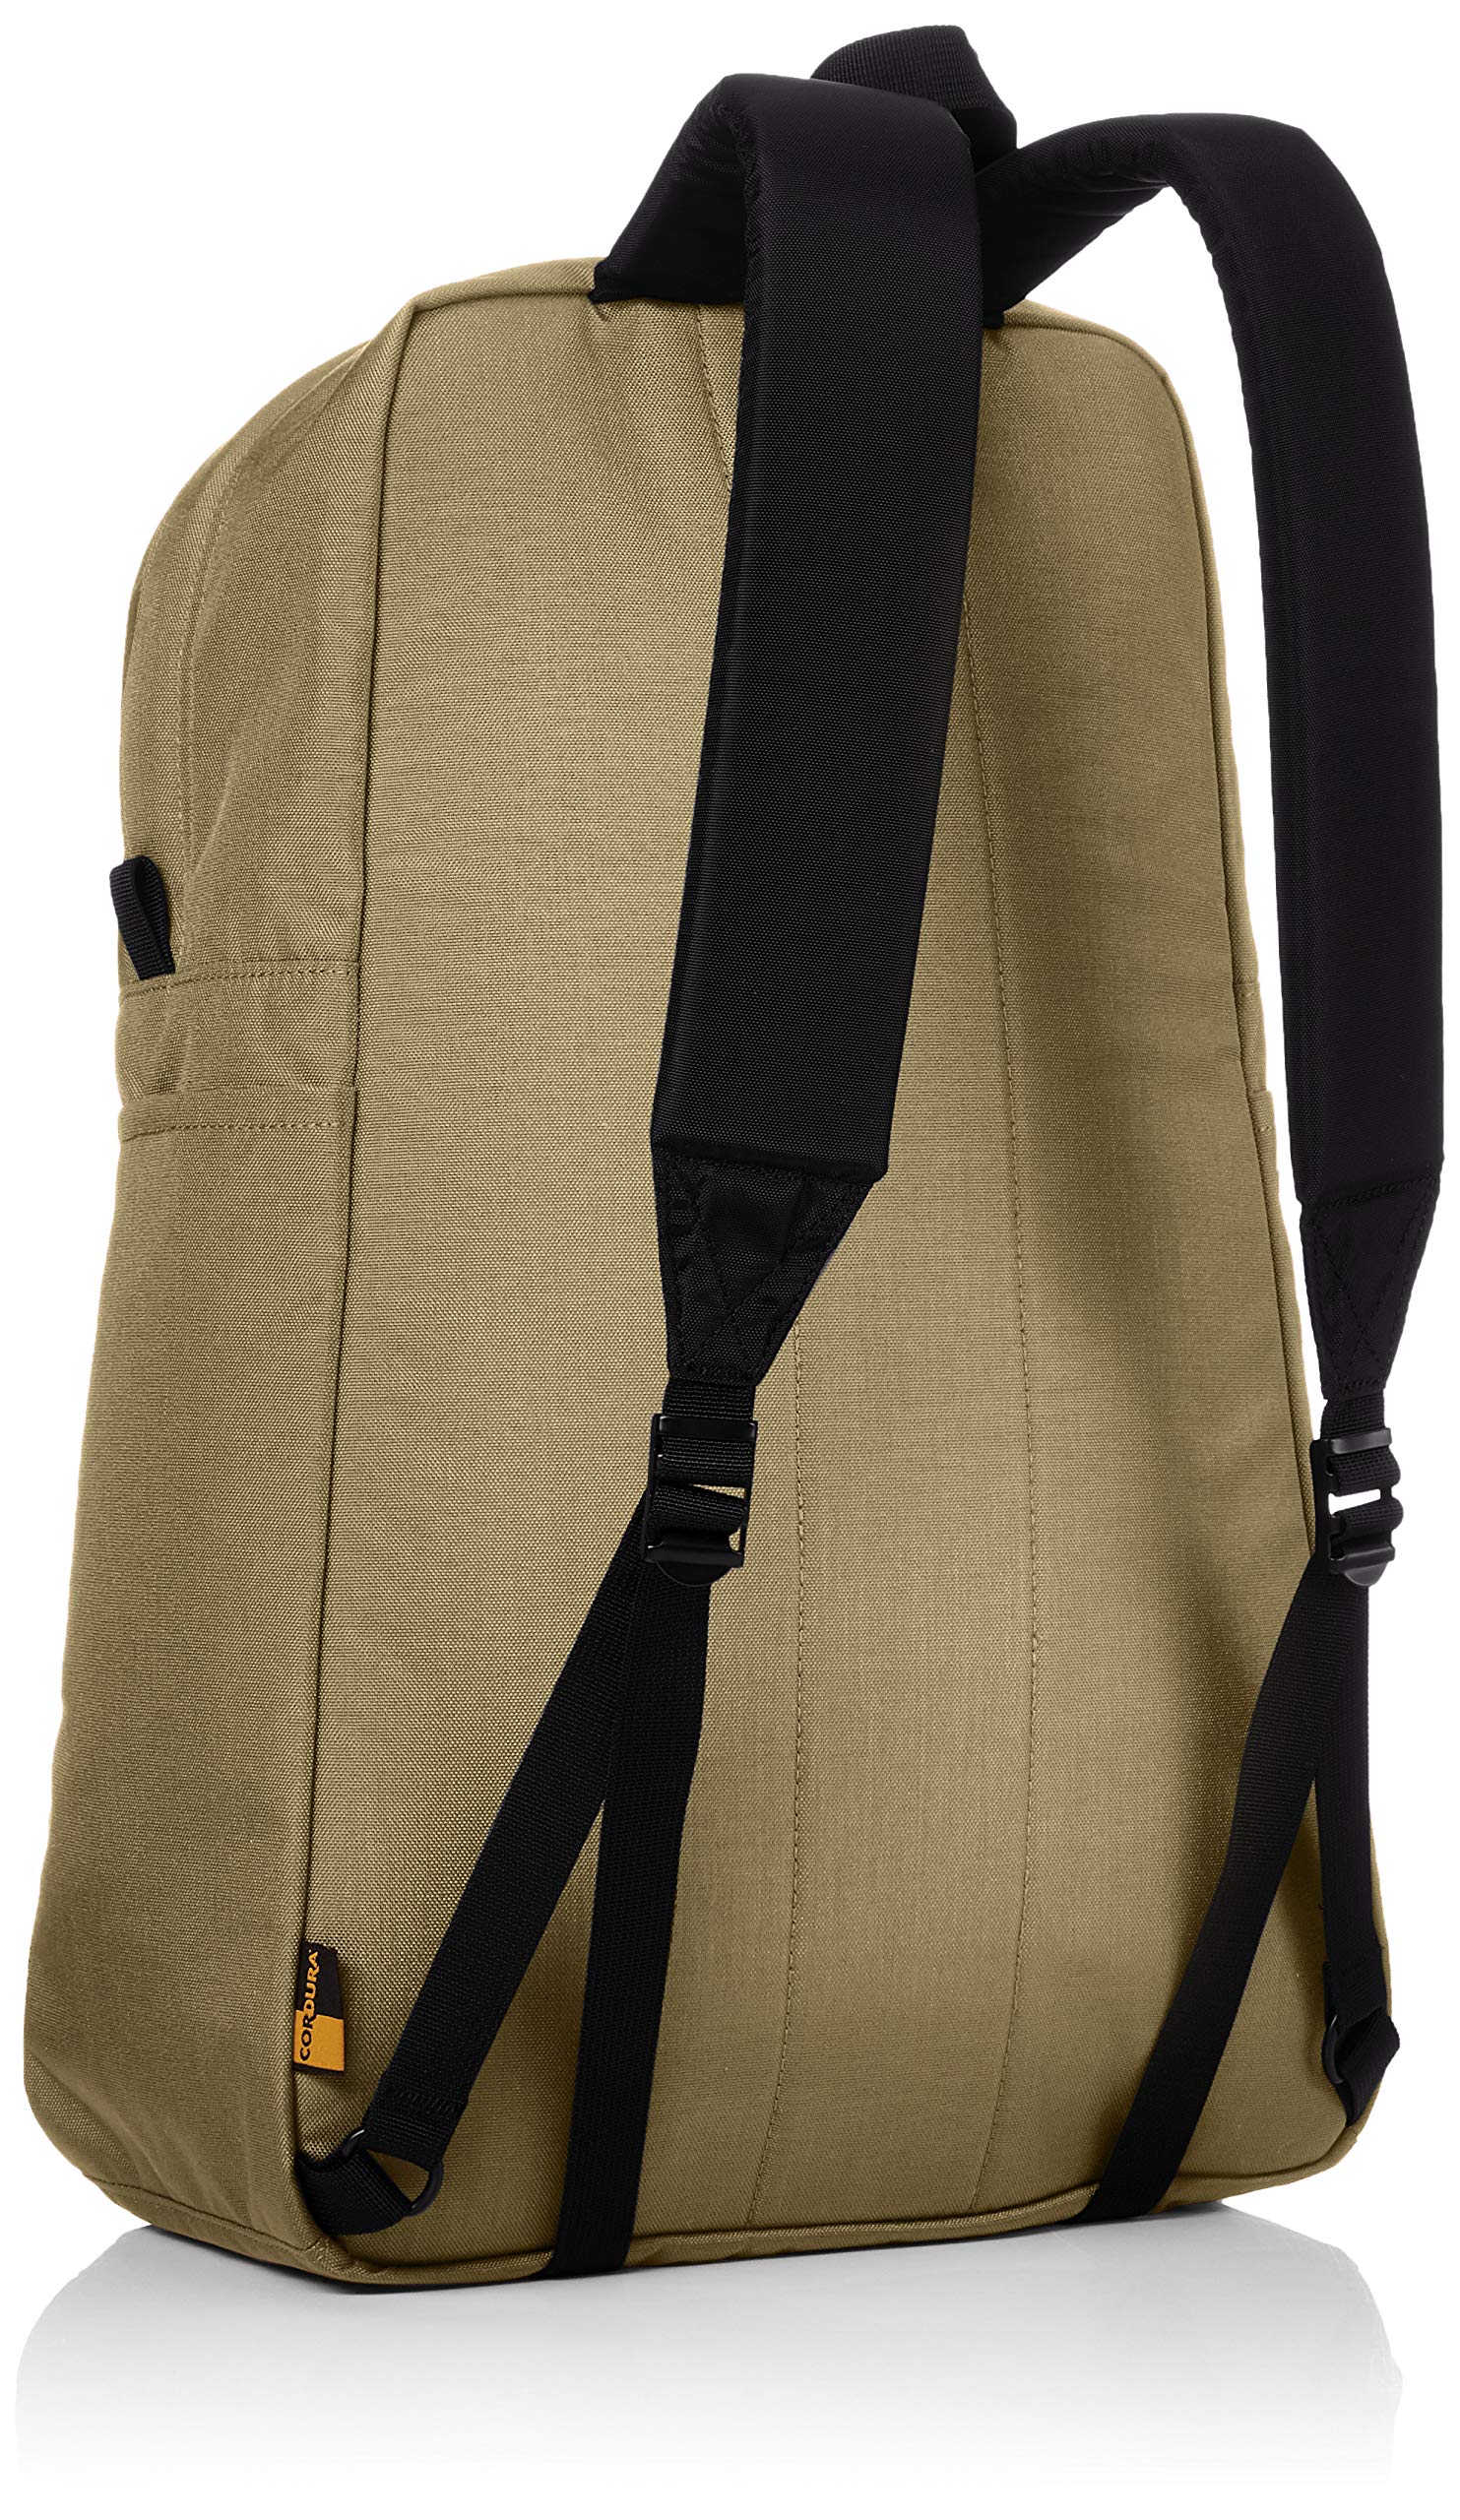 Kelty 2592273 TABLELAND Backpack, Capacity: 5.1 gal (23 L)